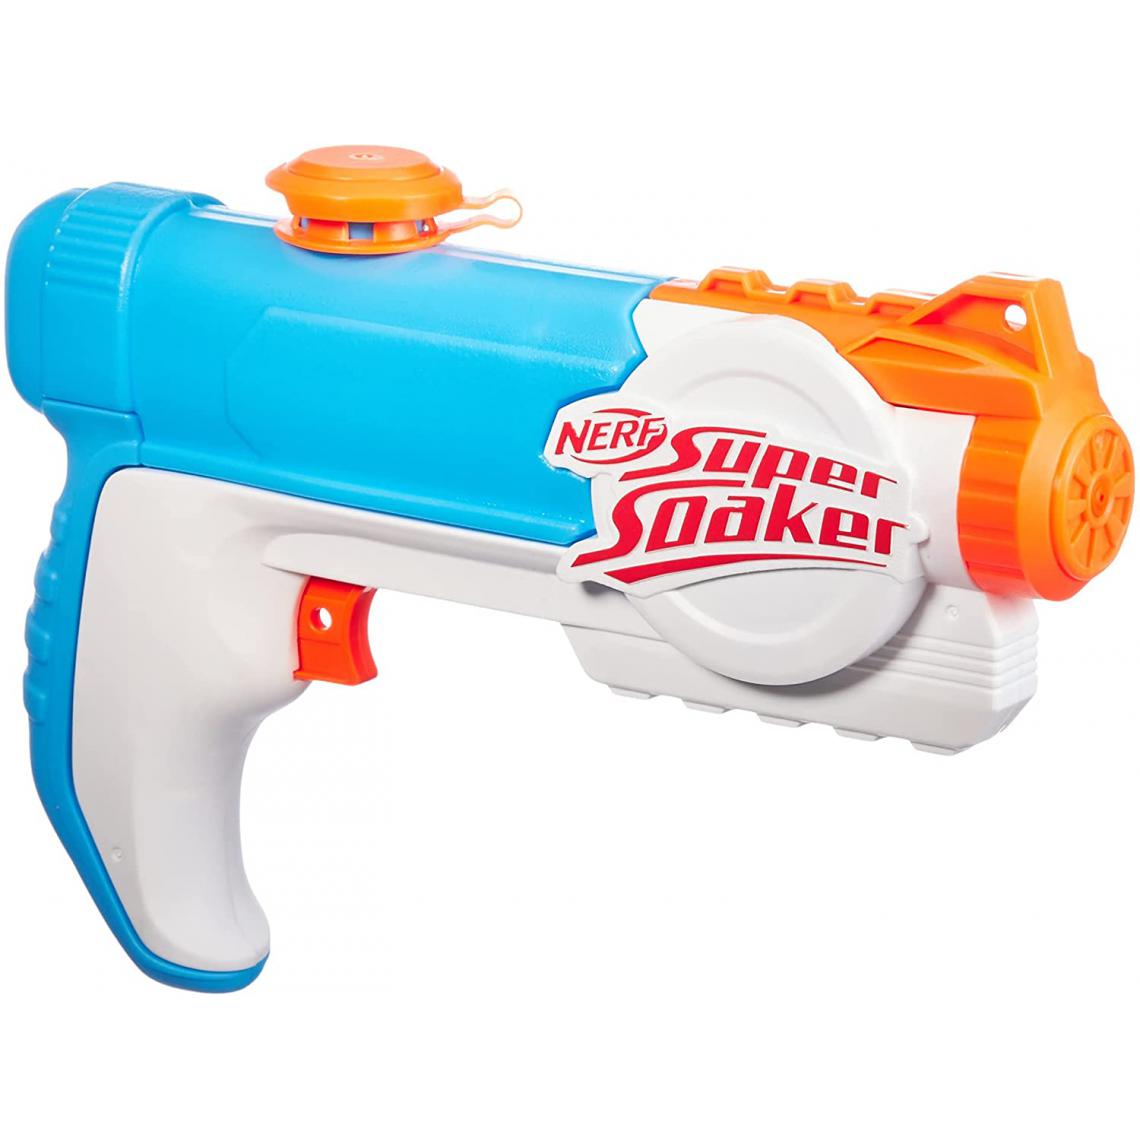 Nerf - pistolet a eau Super Soaker Piranha blanc bleu orange - Jeux d'adresse